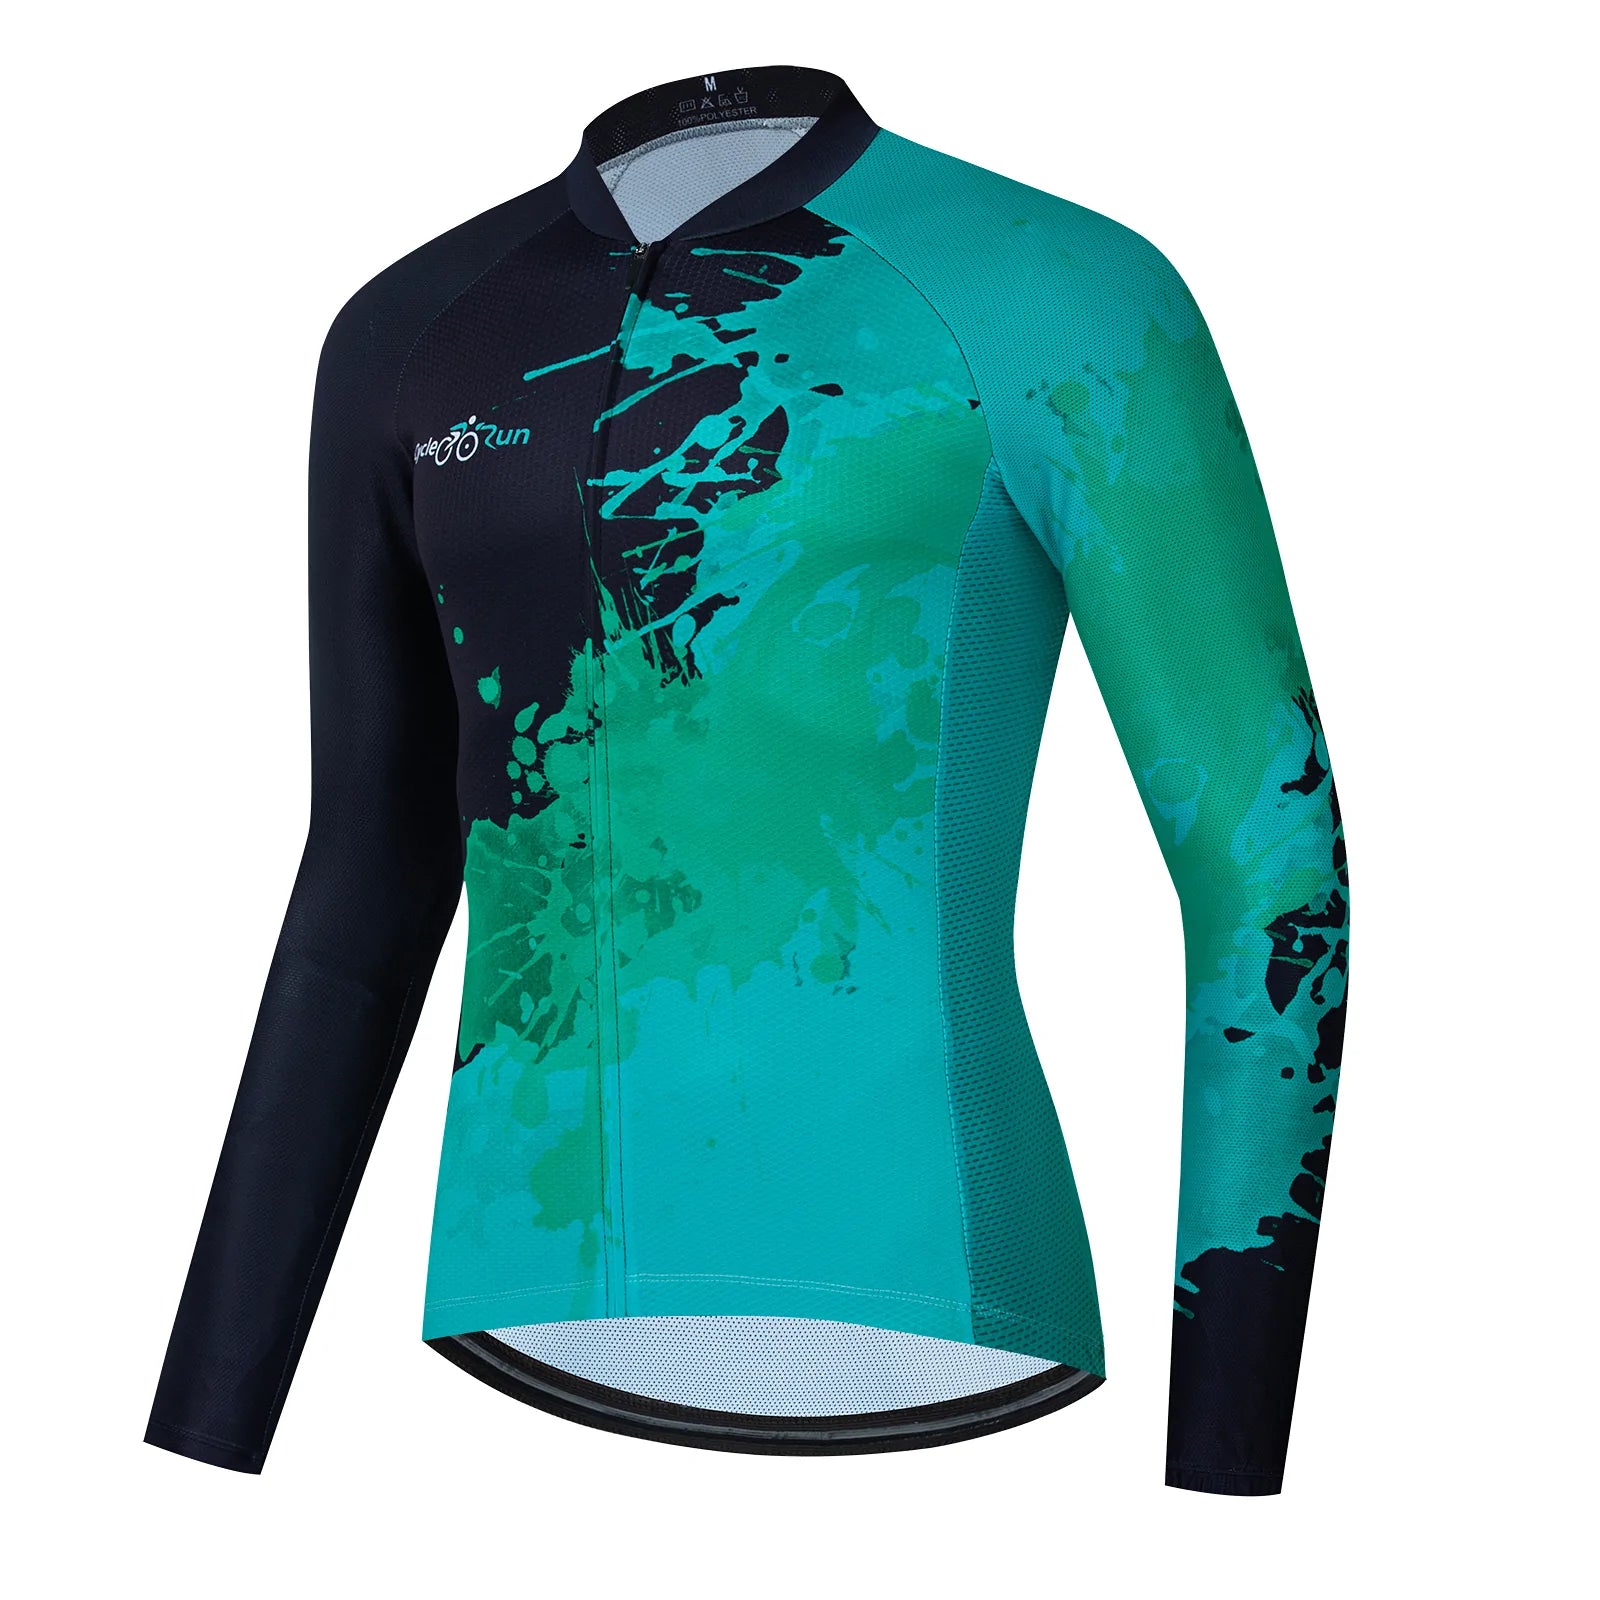 Black green paint splash Long Sleeve cycling jersey for women